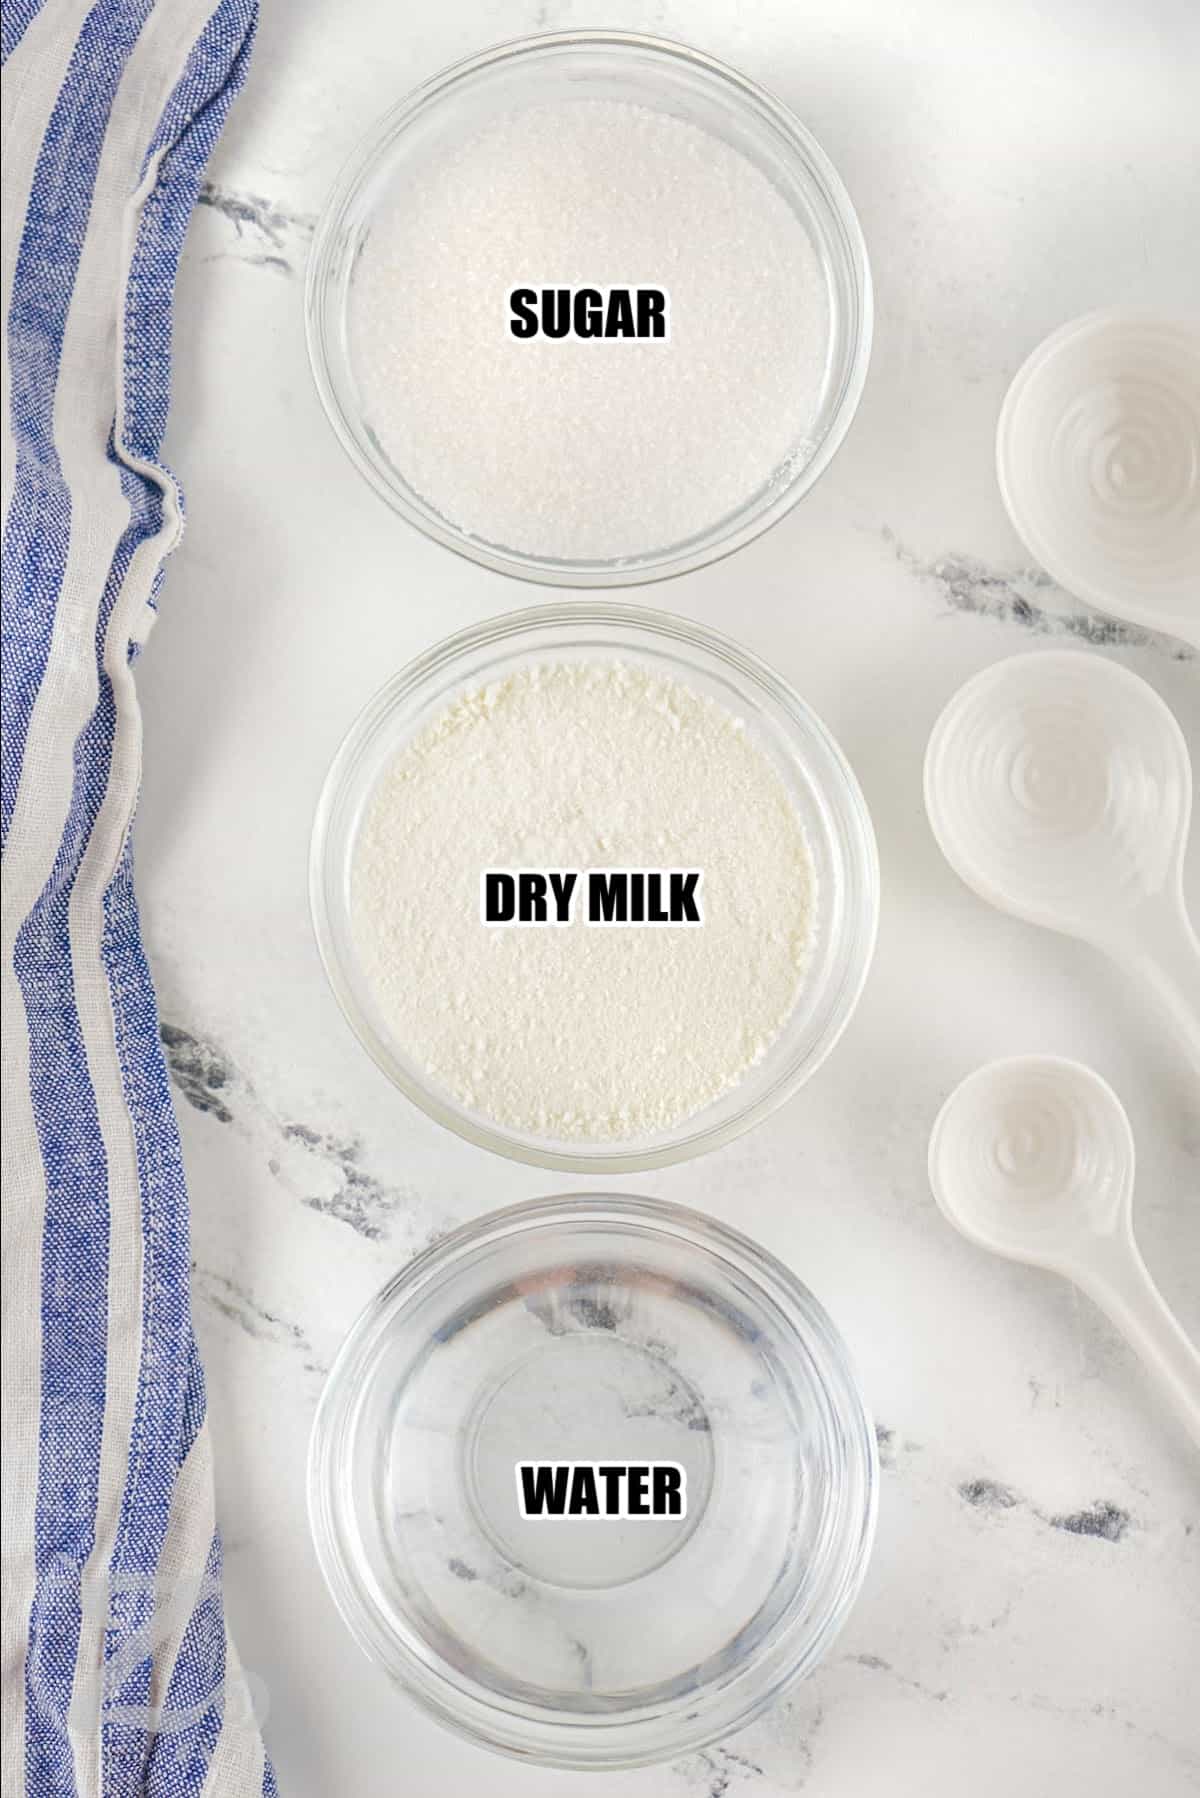 ingredients to make sweetened condensed milk labeled: sugar, dry milk, and water.